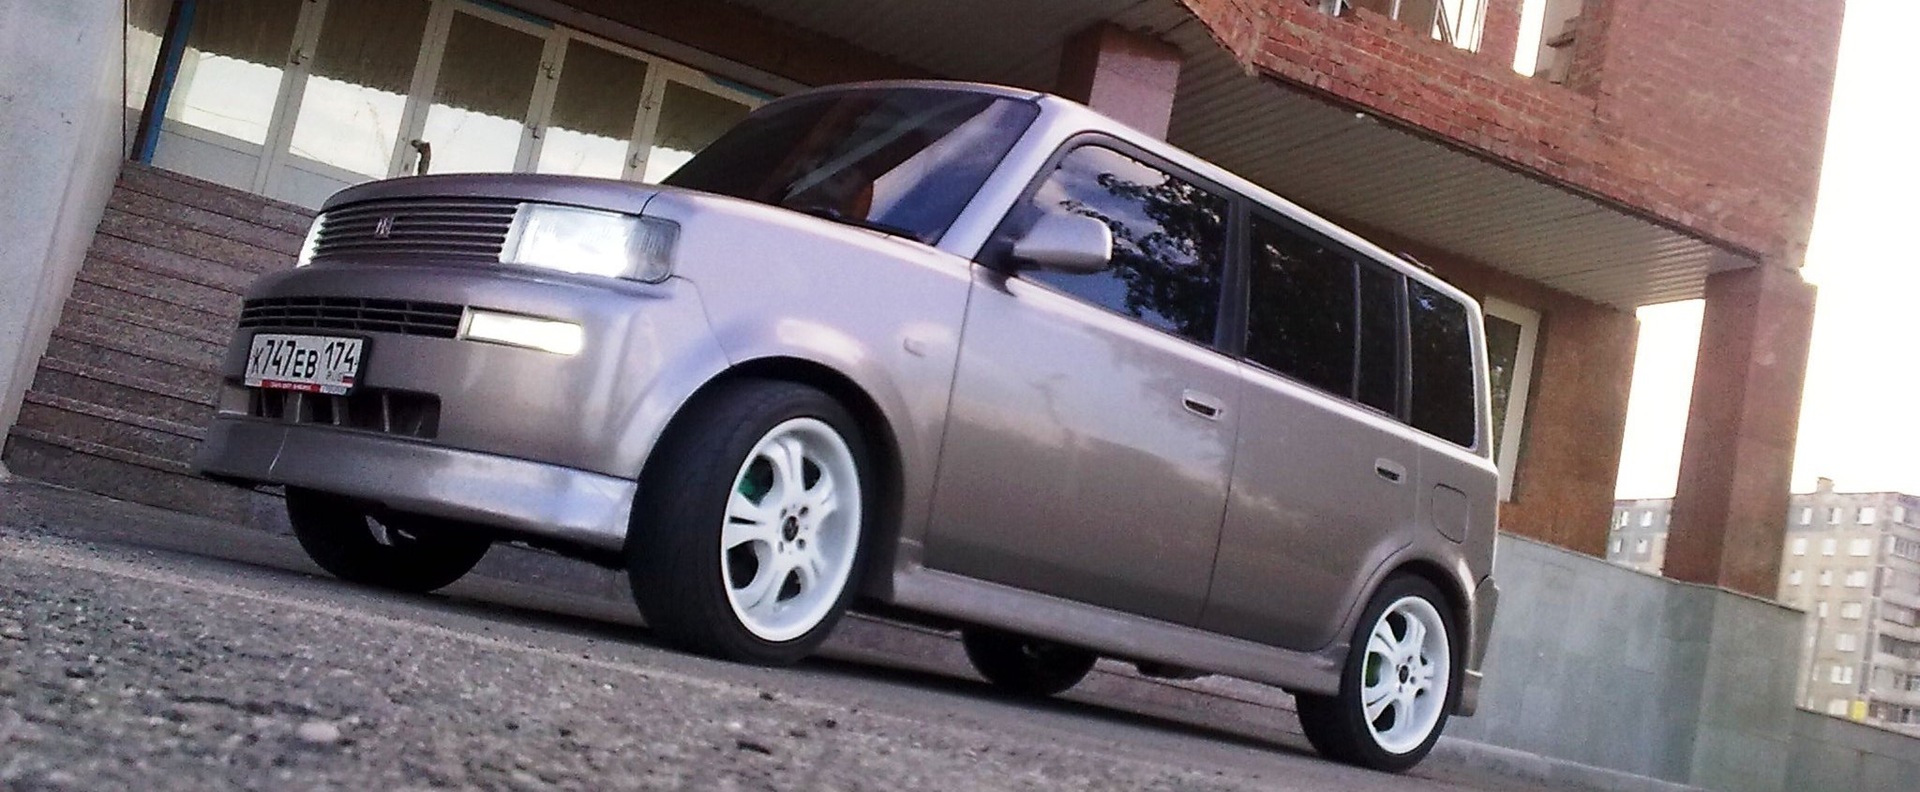 S Toyota bB 15 2000 